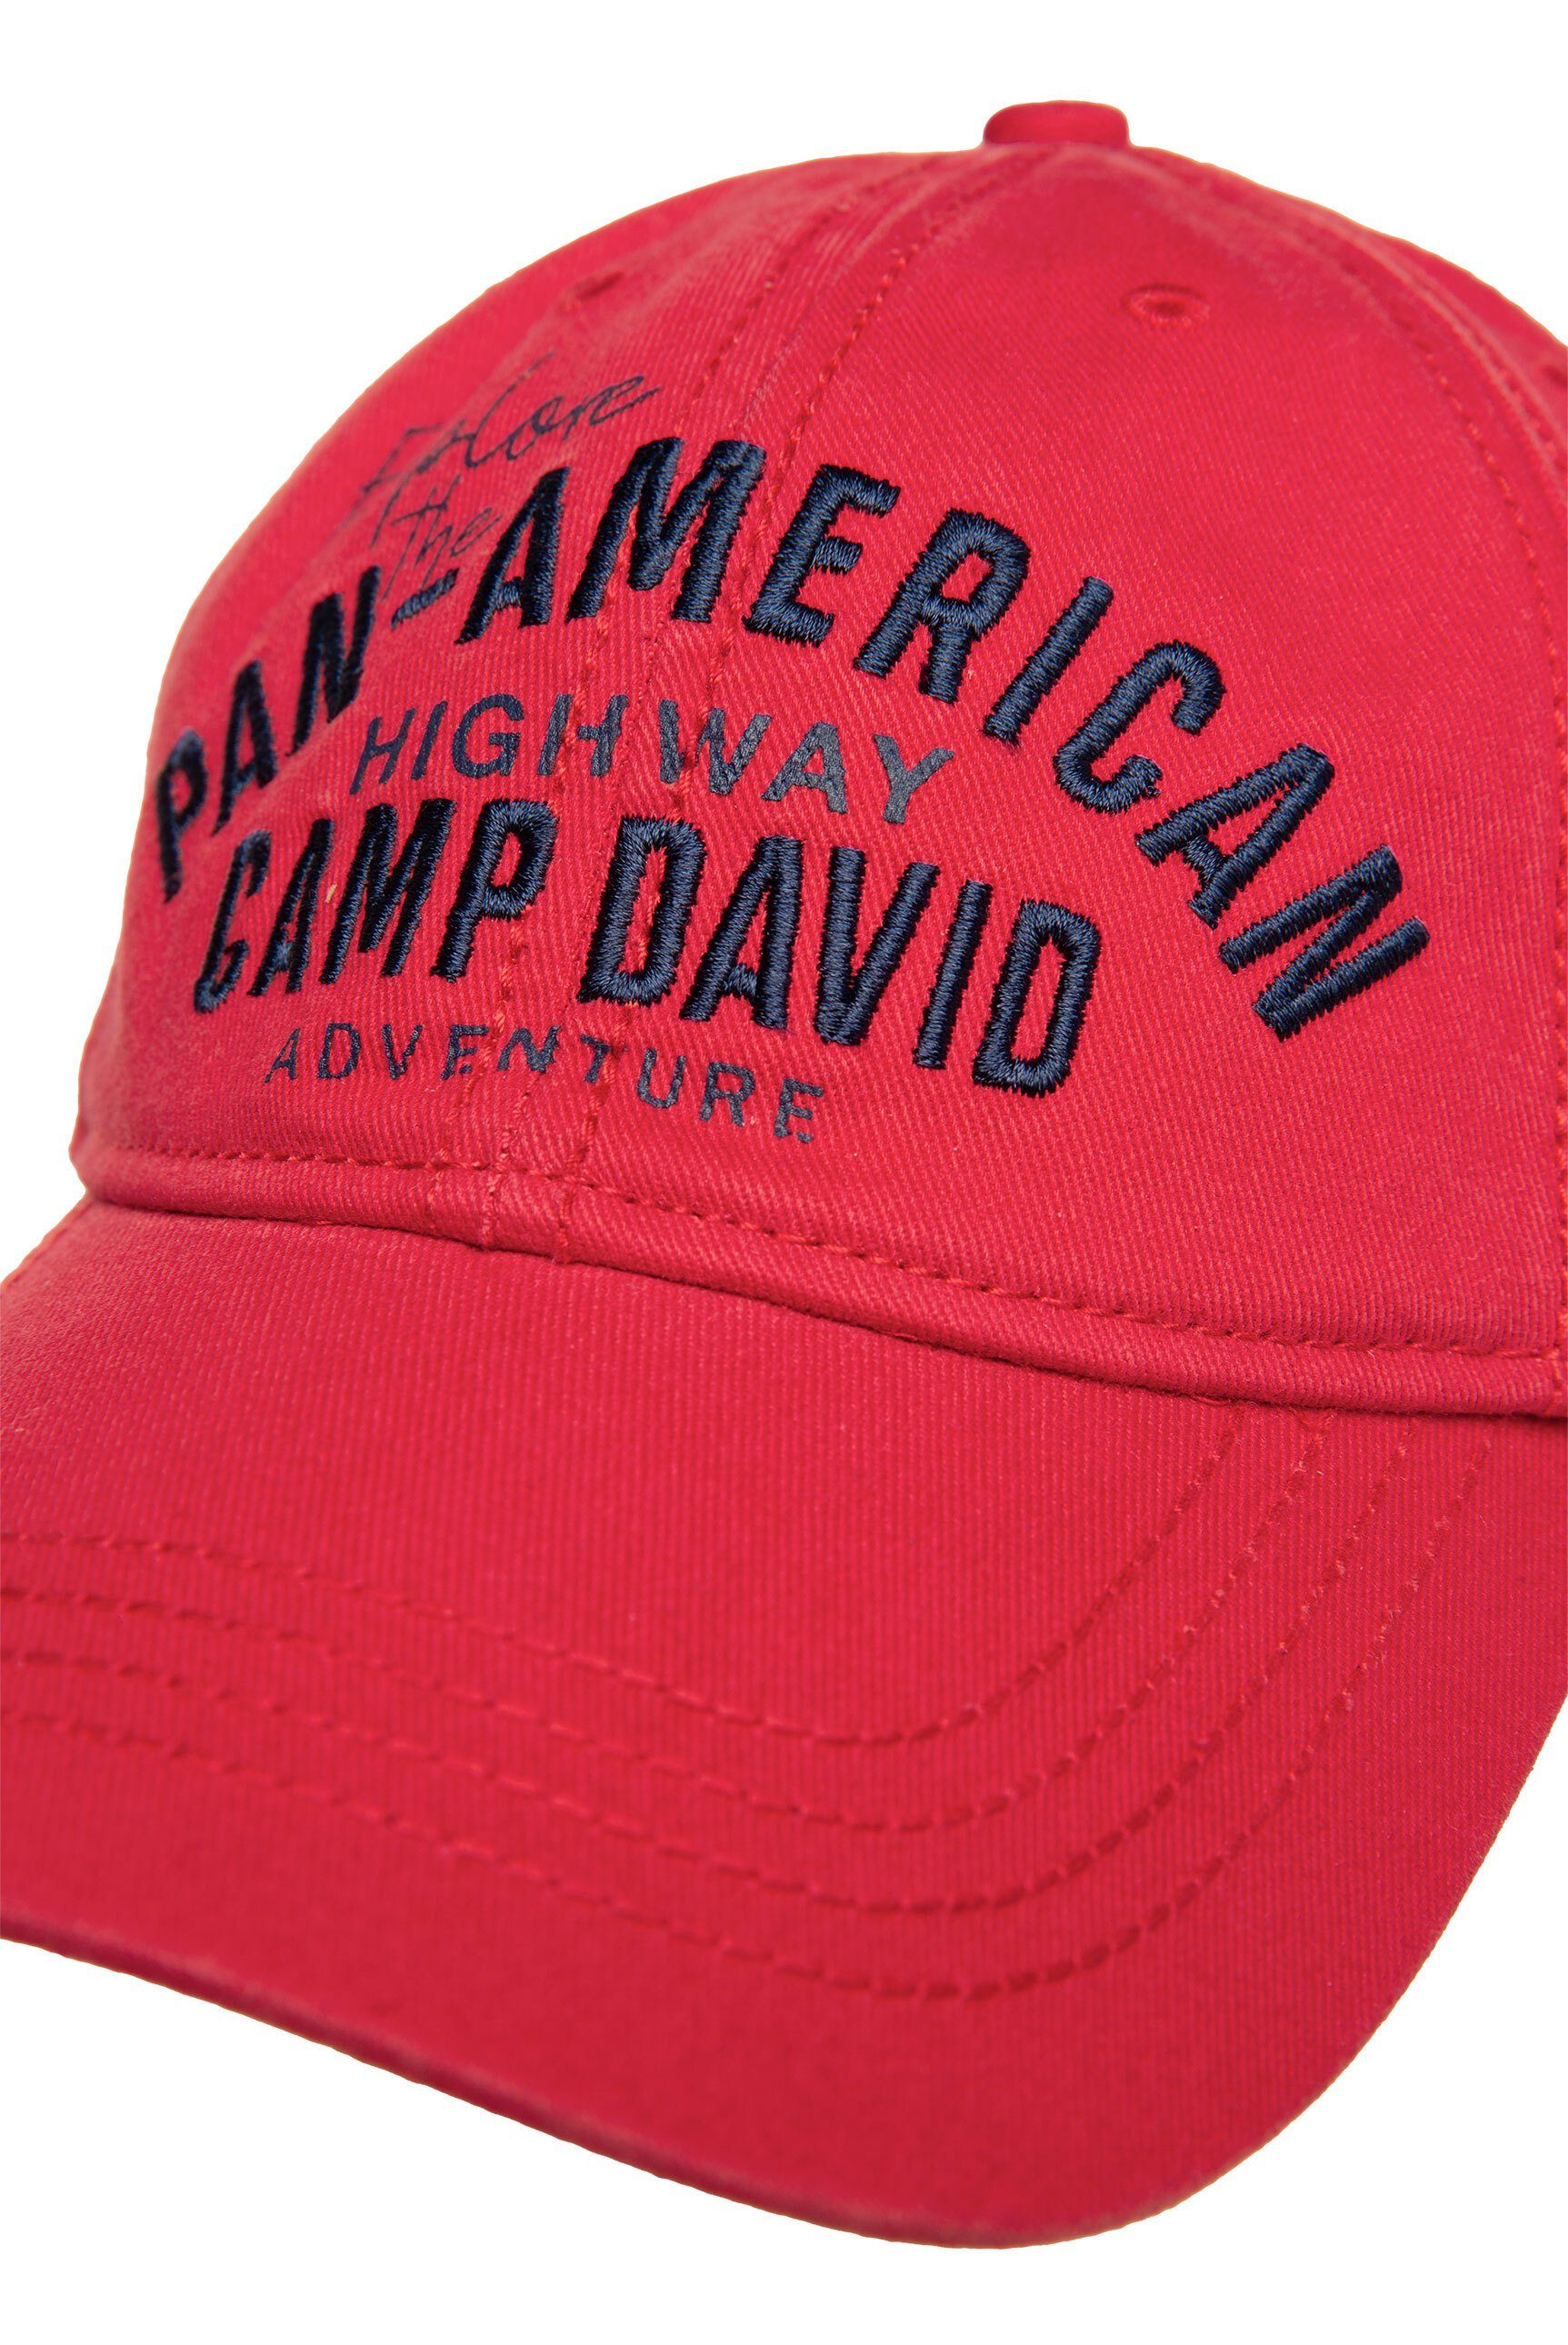 DAVID mit Baseball Cap Klipp-Verschluss CAMP